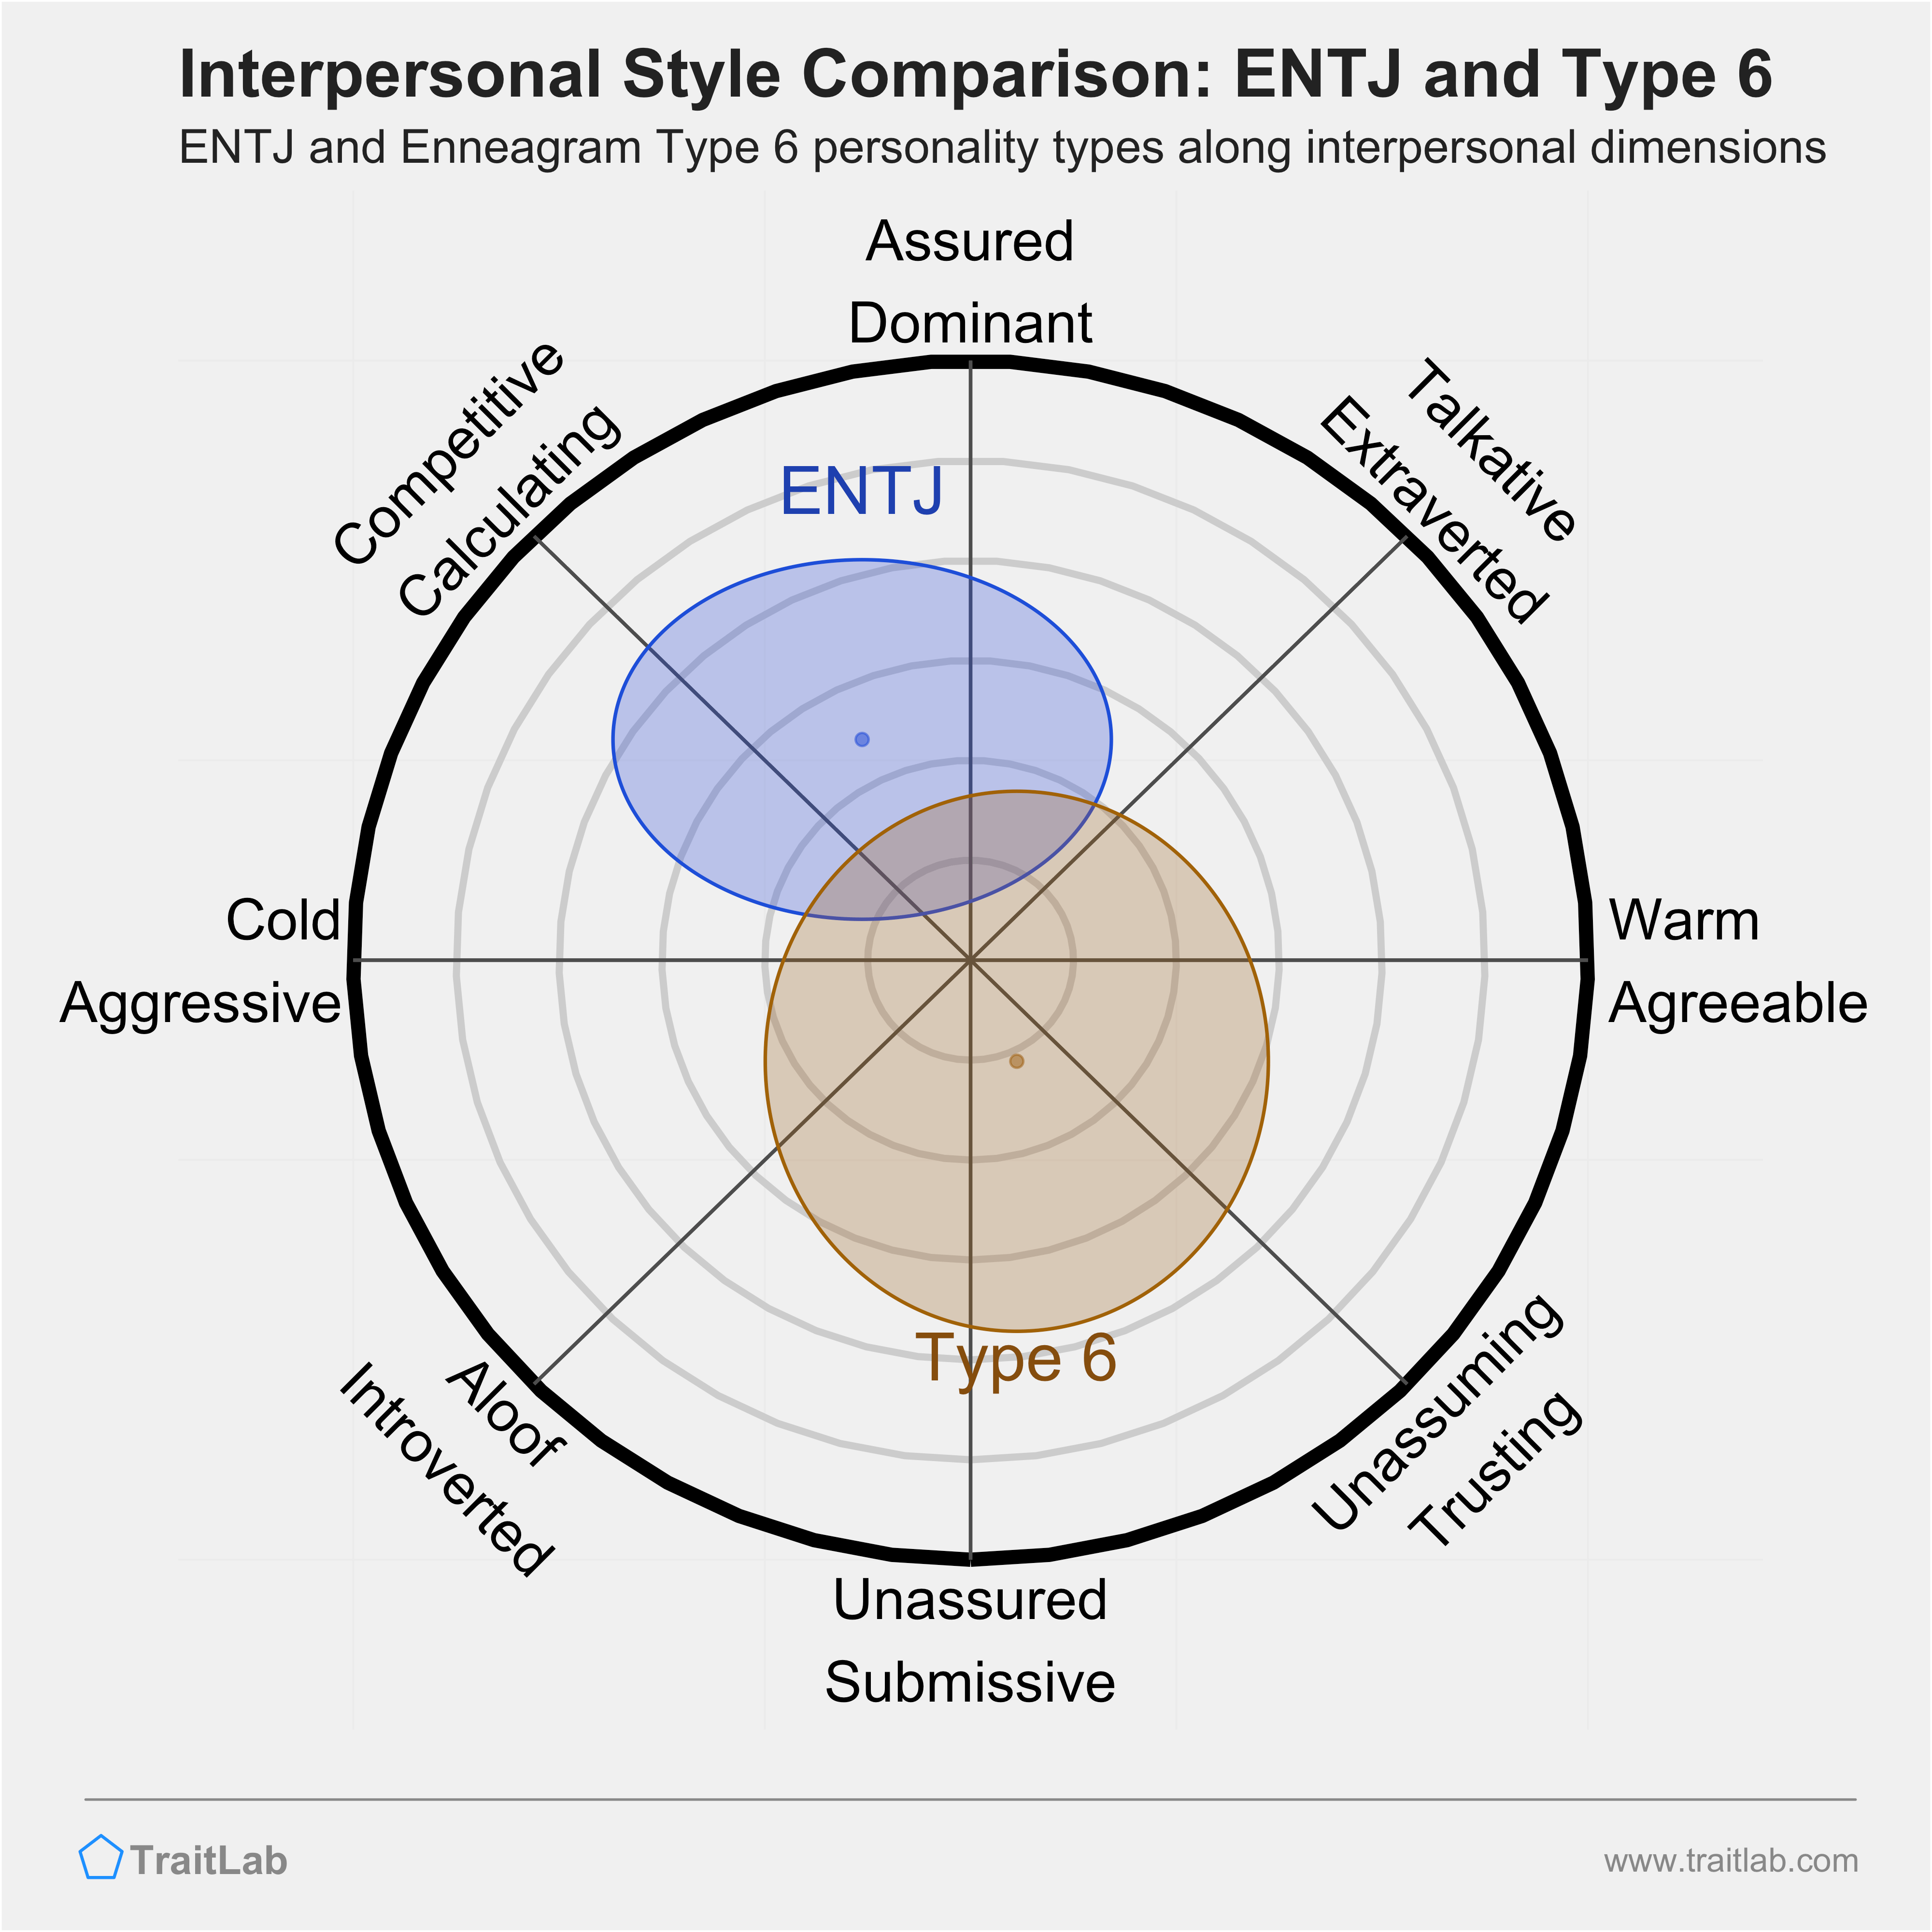 Enneagram ENTJ and Type 6 comparison across interpersonal dimensions